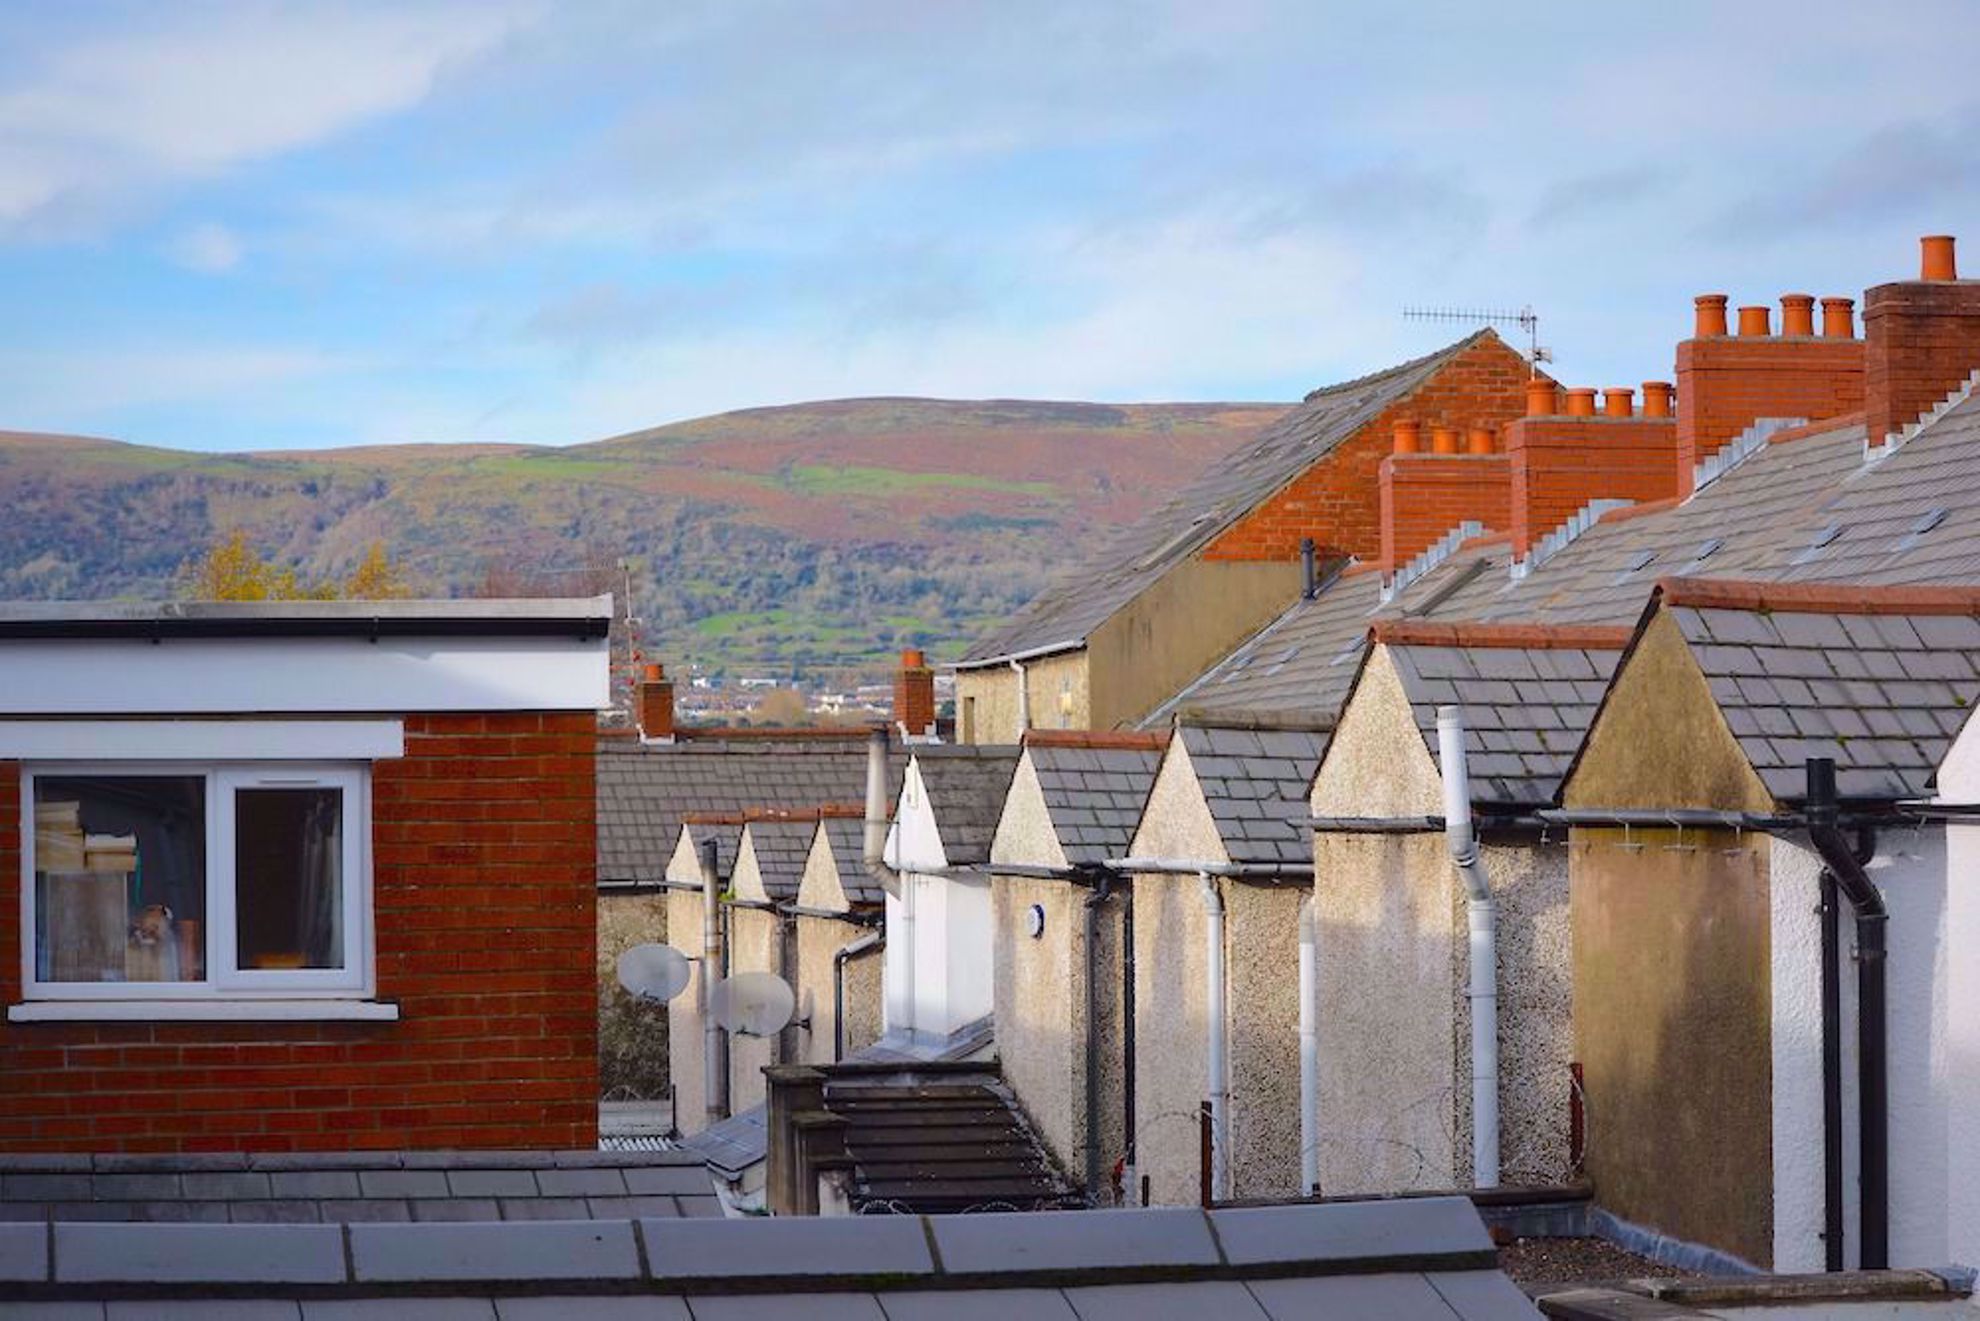 Residences near hills in Belfast